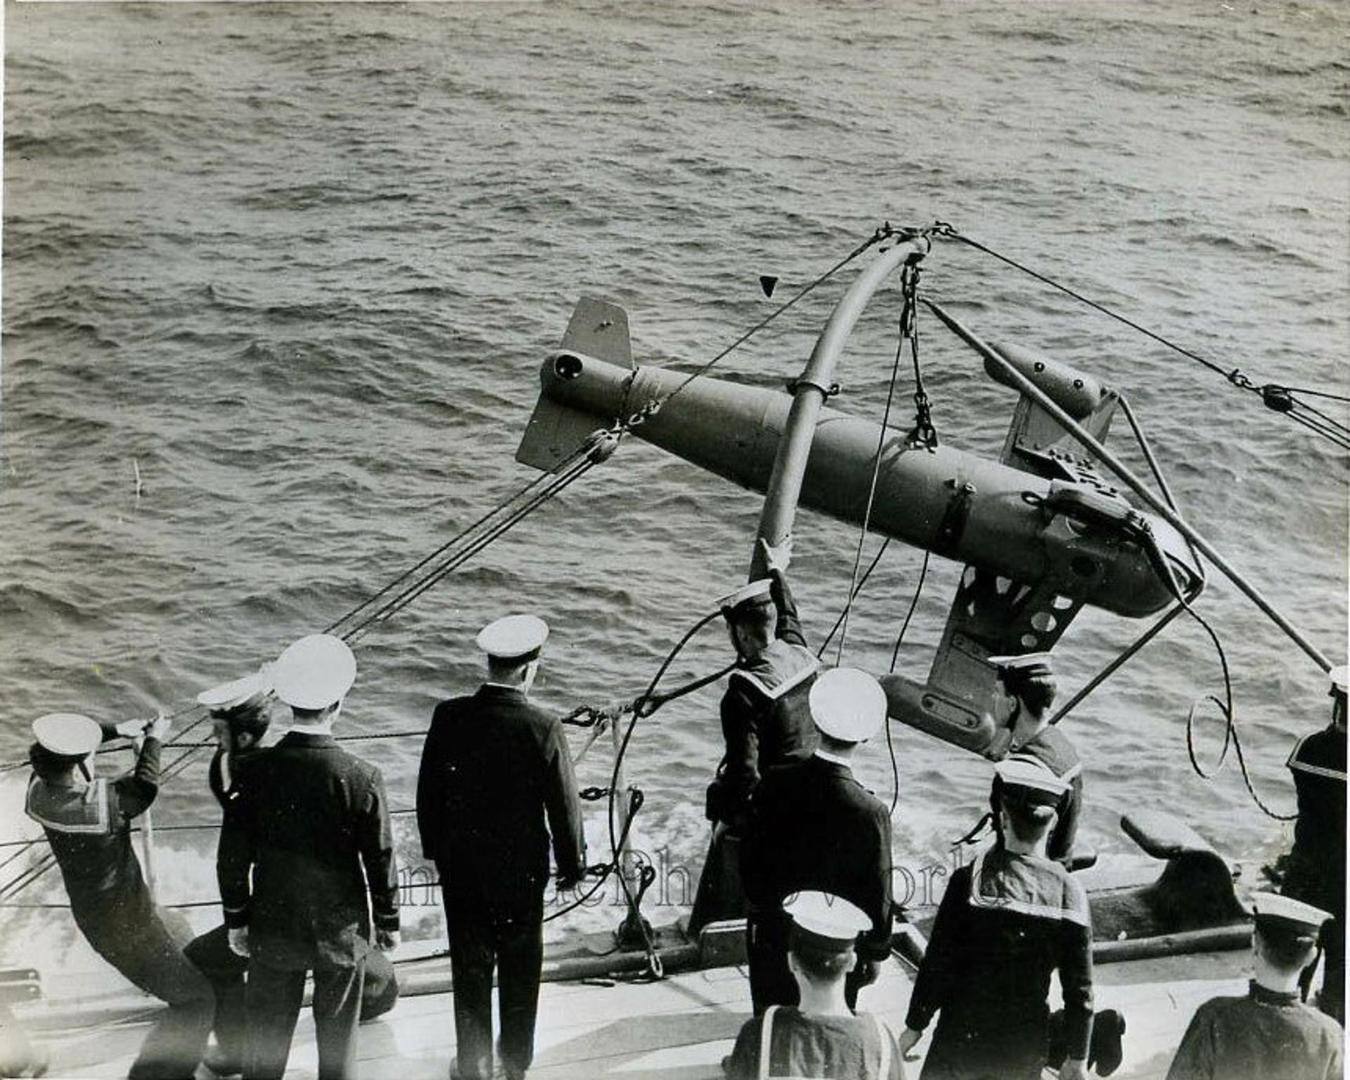 Eksplozivni paravan (High Speed Submarine Sweep/HSSS) bio je namjenjen protupodmorničkoj bombi. Na slici vidimo spuštanje paravana s krme jednom britanskog ratnog broda. Oko stotinjak razarača i patrolnih brodova bilo je opremljeno s HSSS-om